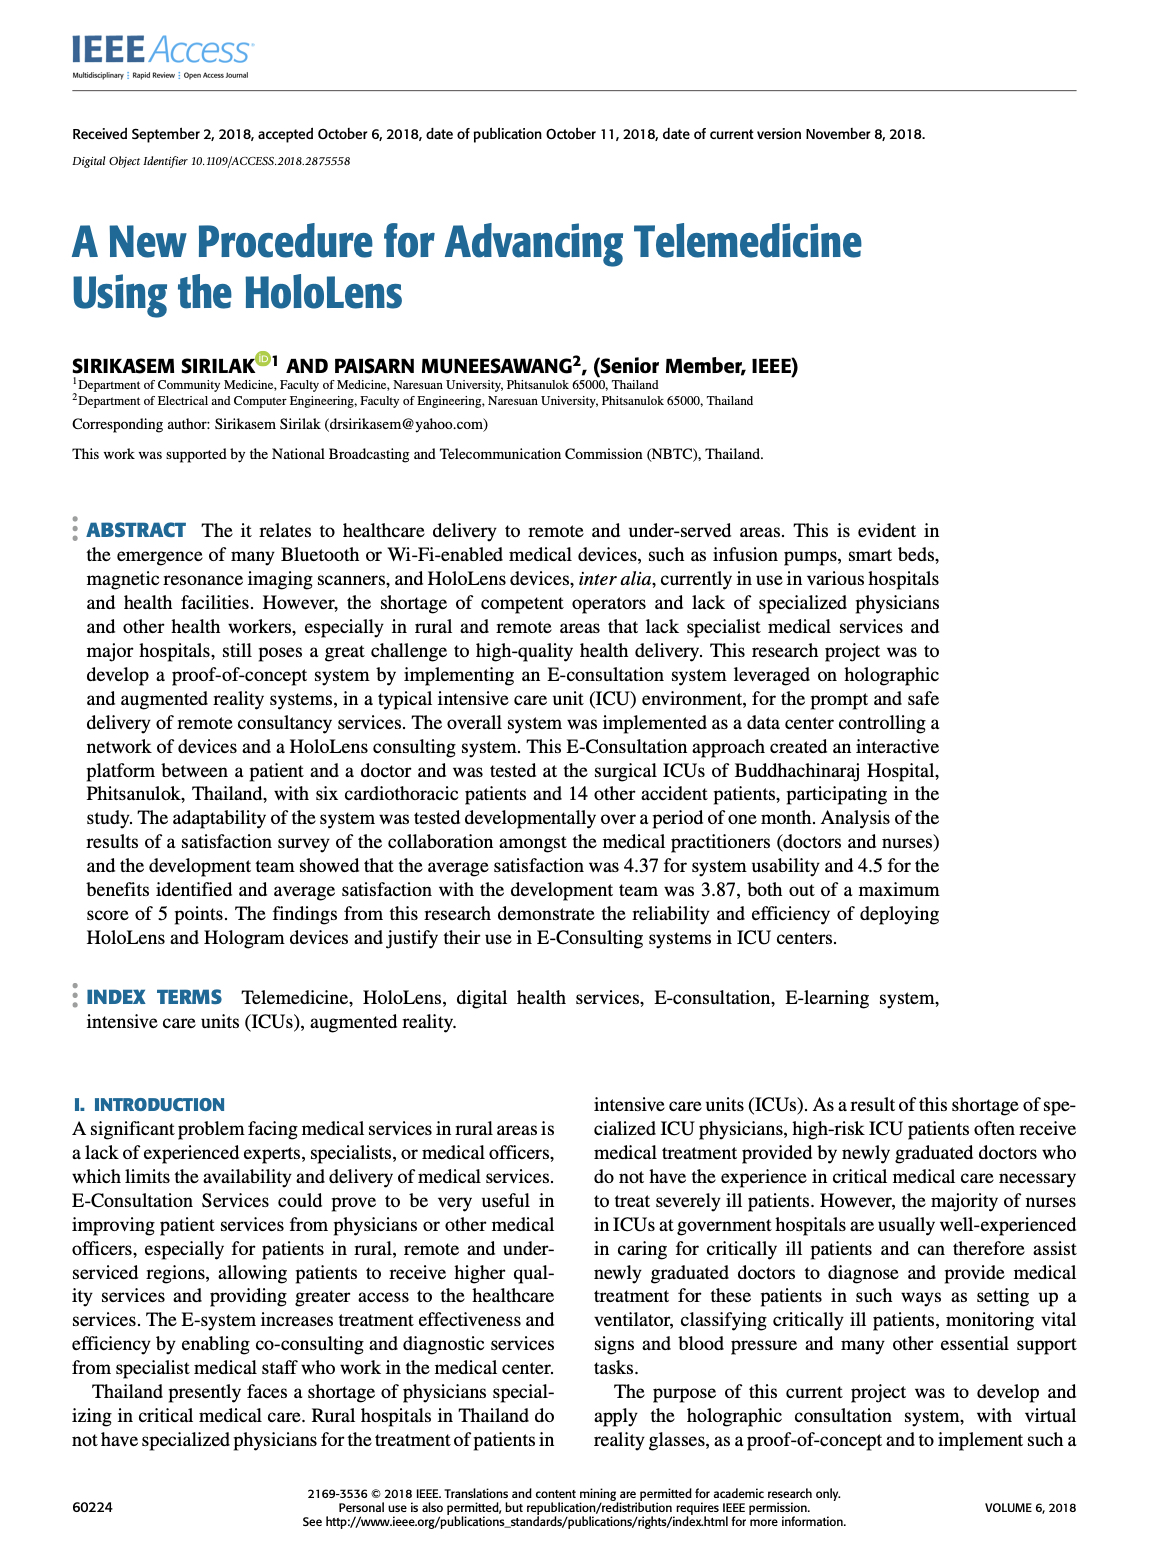 A New Procedure for Advancing Telemedicine Using the HoloLens By:Sirilak, S (Sirilak, Sirikasem)[ 1 ] ; Muneesawang, P (Muneesawang, Paisarn)[ 2 ]